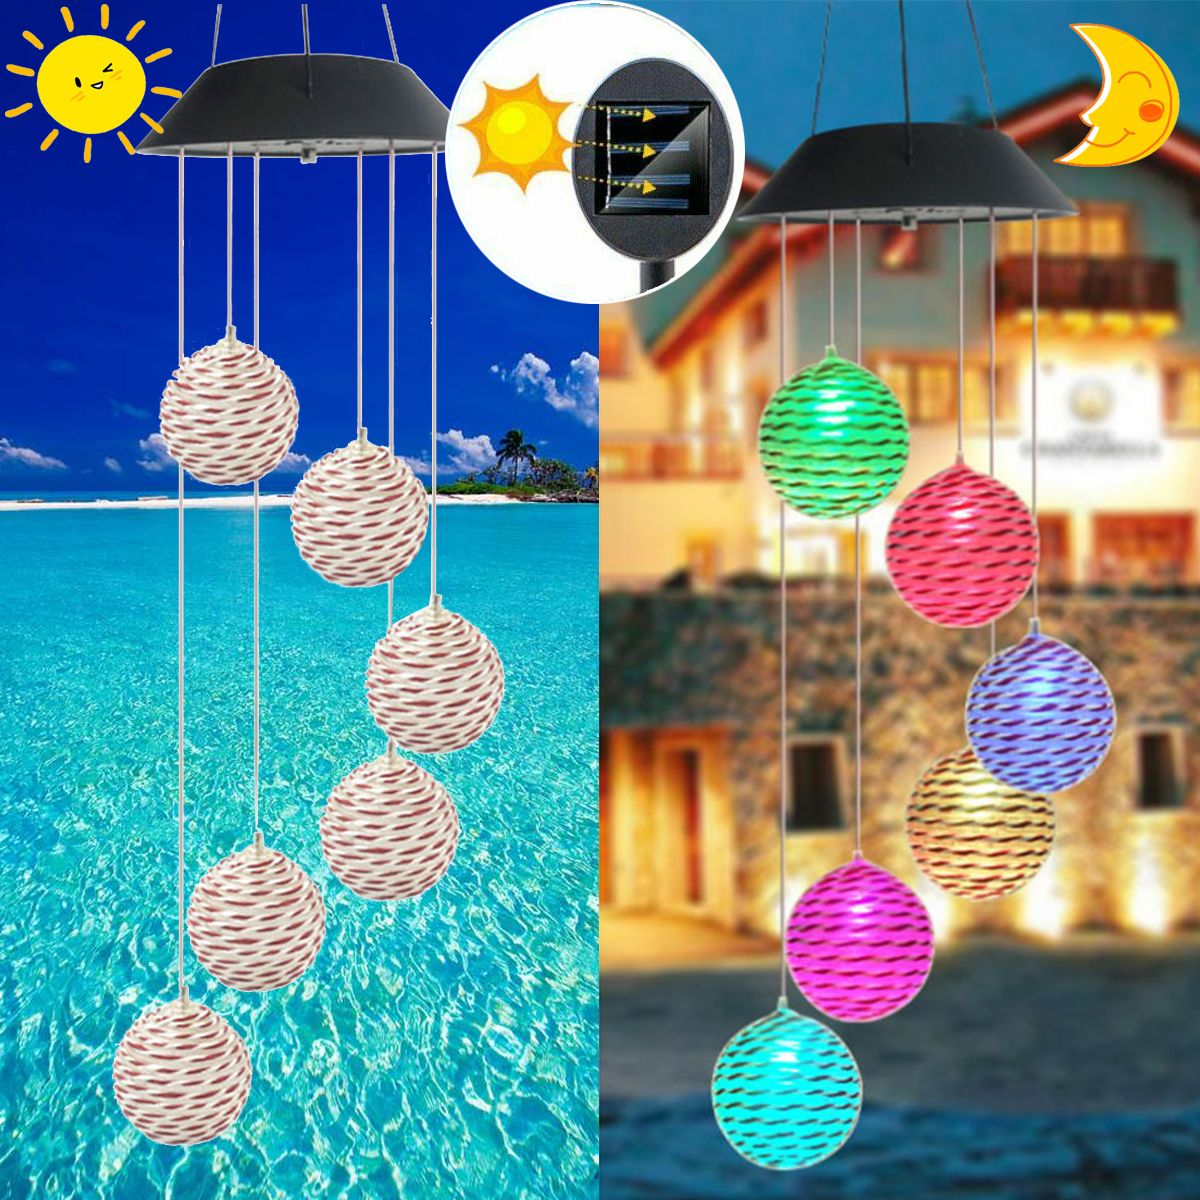 Color-Changing-Solar-LED-Rattan-Balls-Hanging-Spiral-String-Wind-Chimes-Lamp-Light-1605678